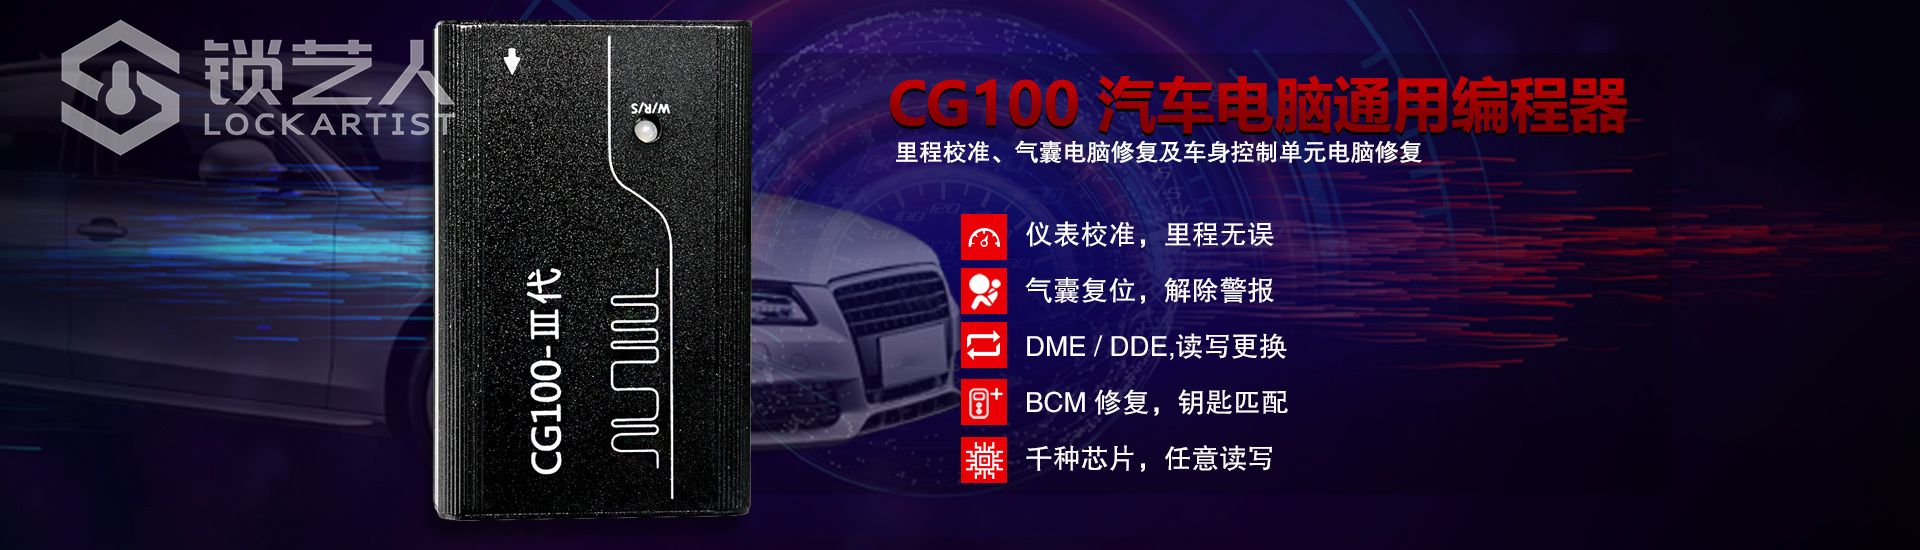 1920X550-CG100-汽车通用编程器Banner中文版-.jpg